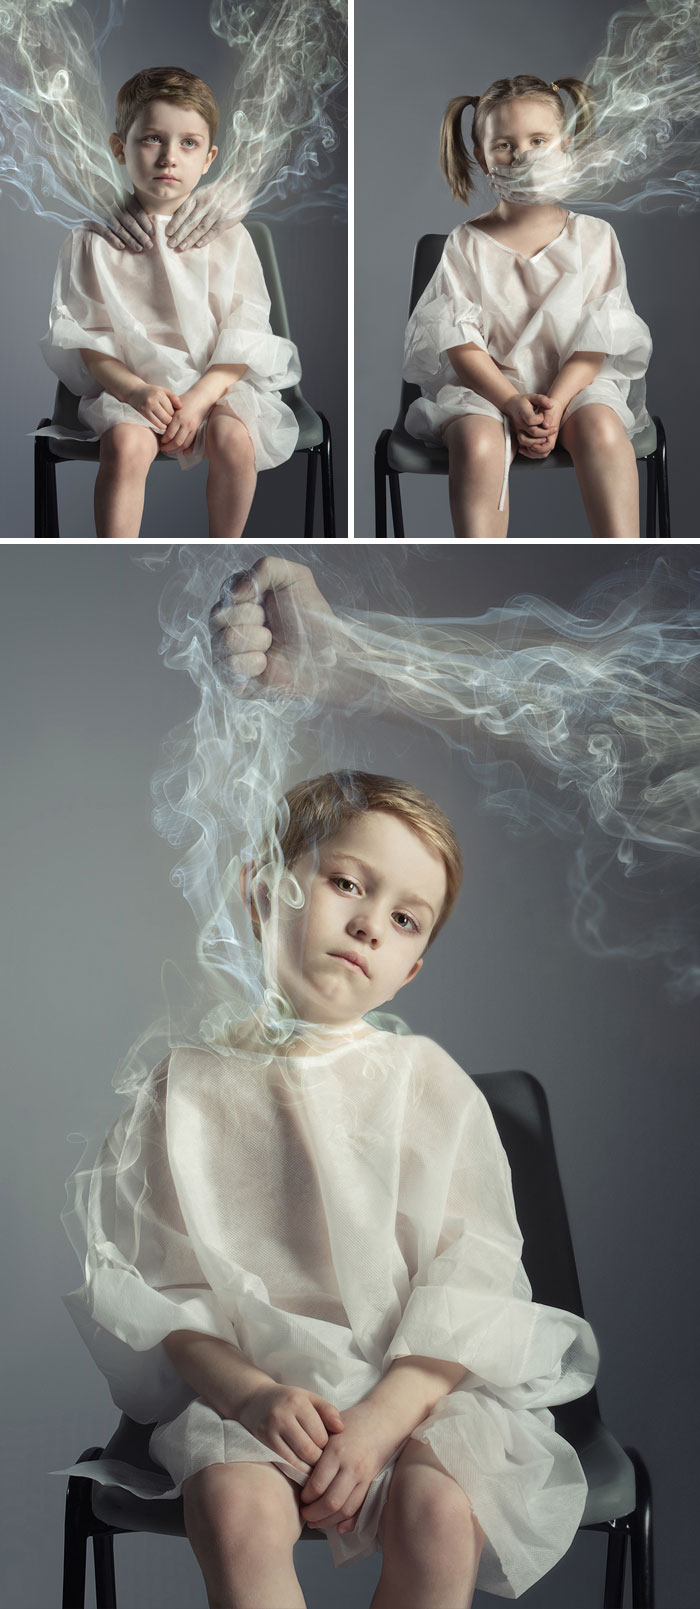 creative-anti-smoking-ads-39-5833f8feb5a27__700